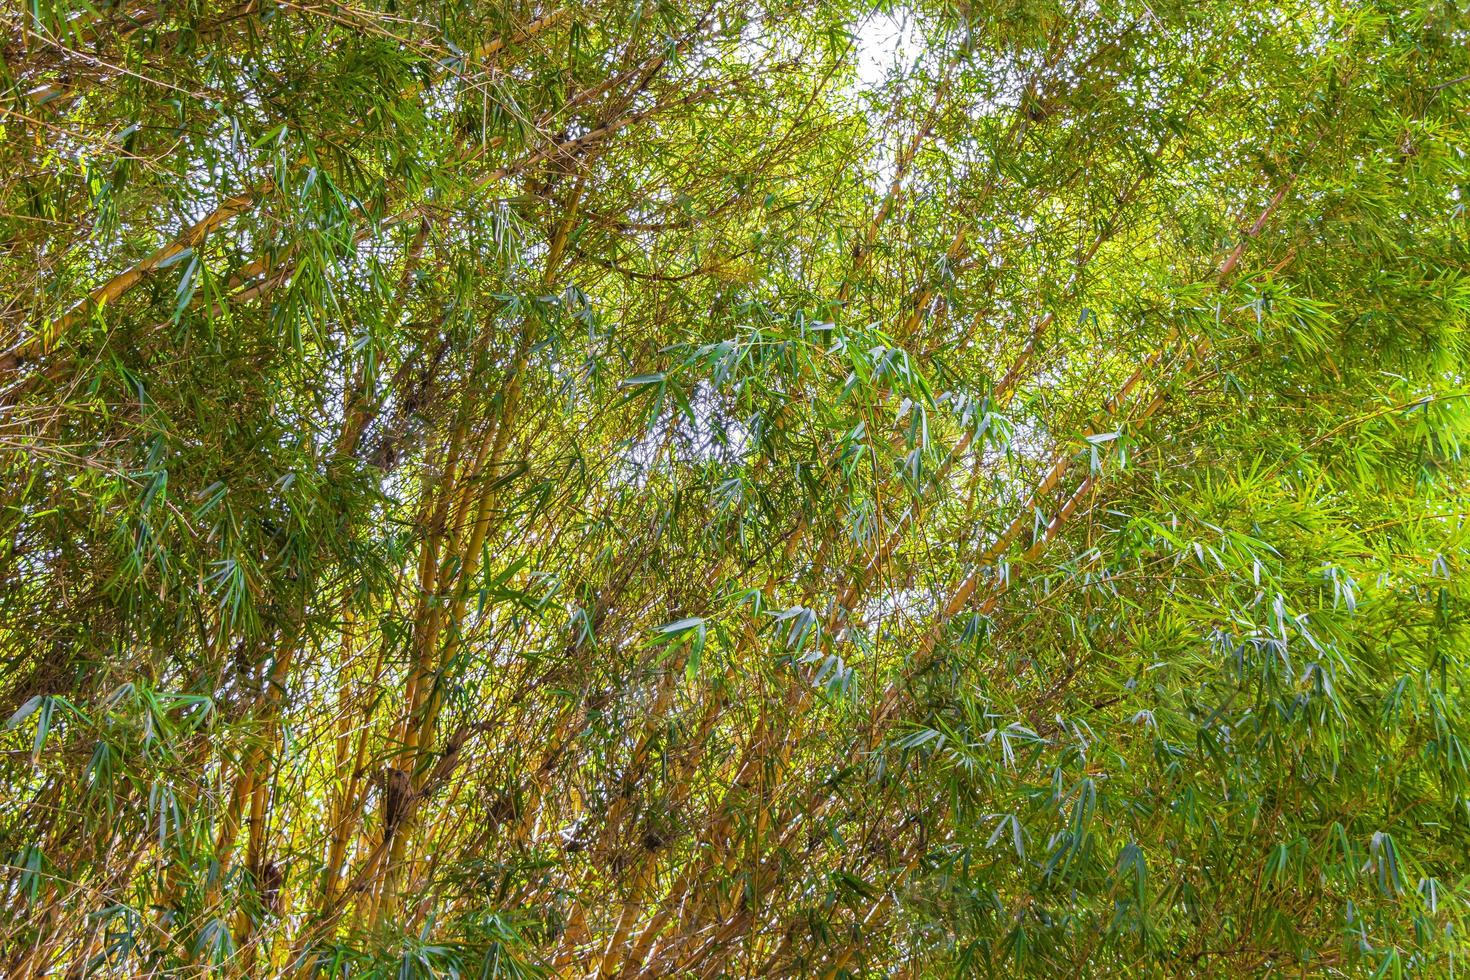 grüne gelbe bambusbäume tropischer wald san jose costa rica. foto